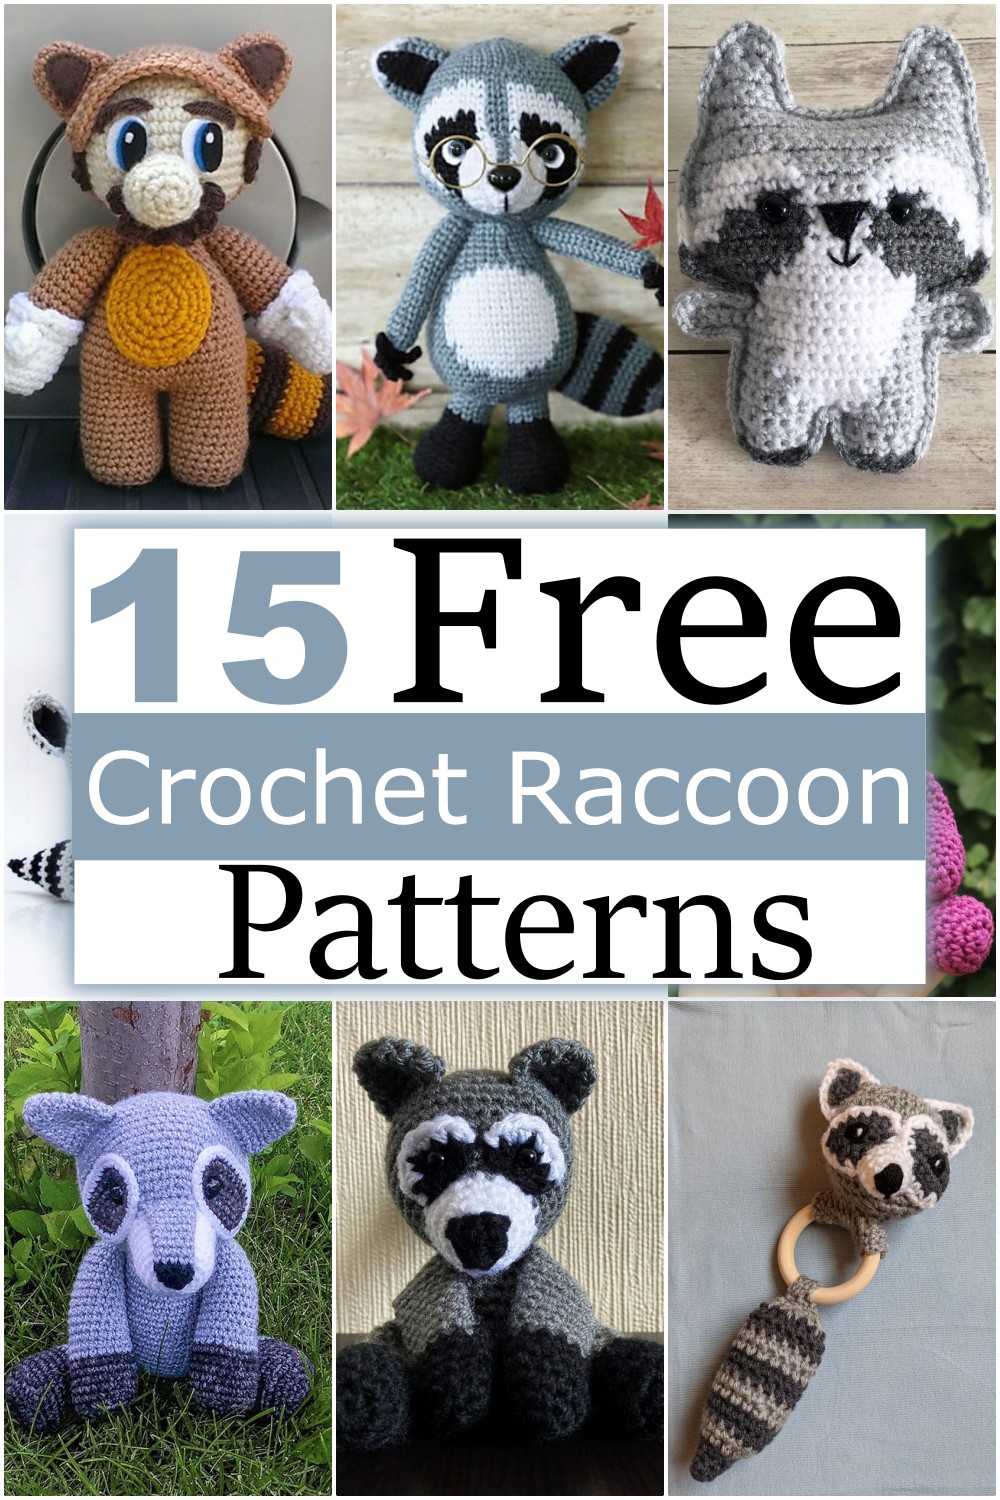 Free Crochet Raccoon Patterns